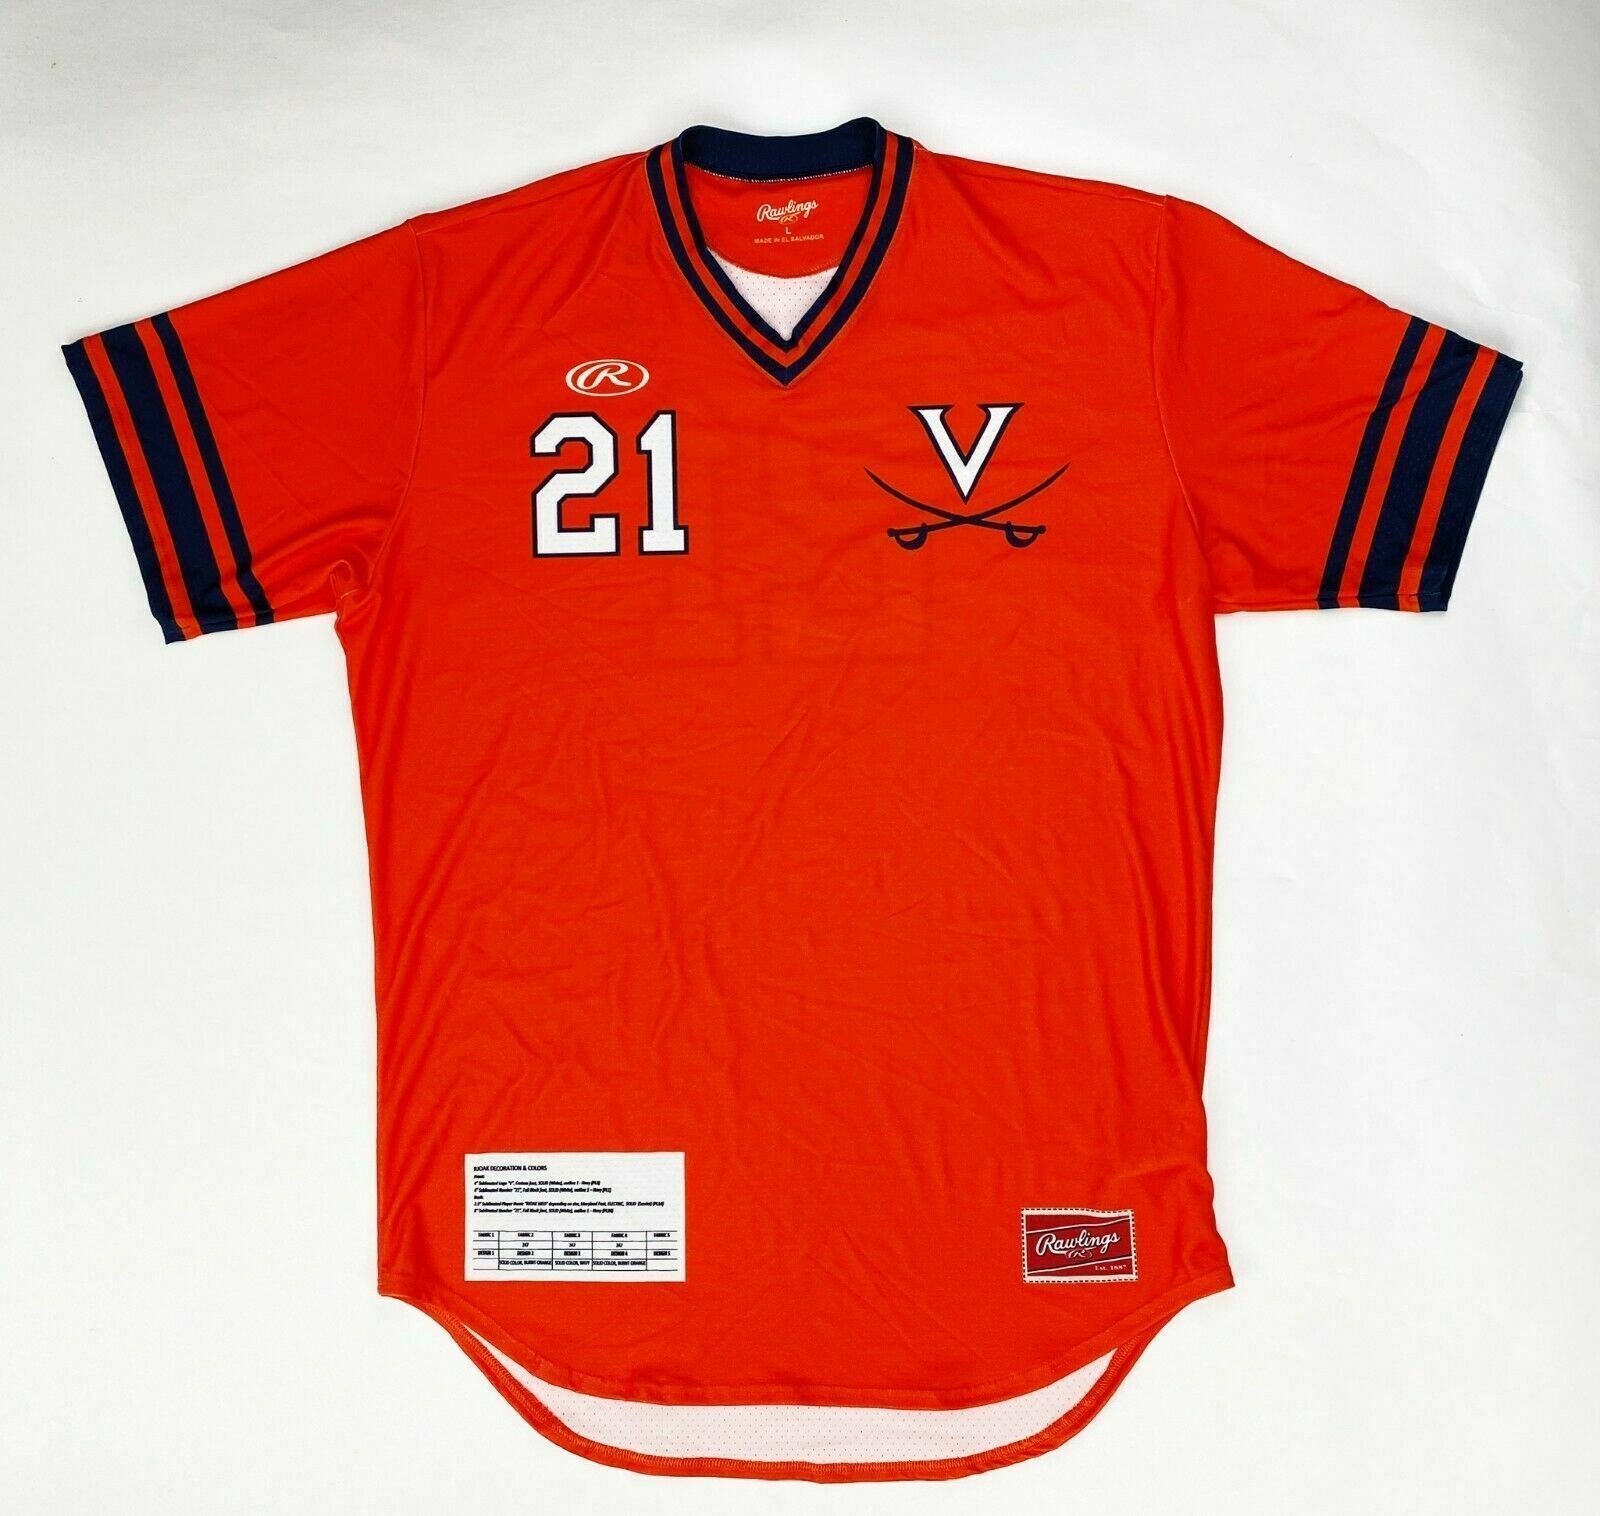 Primary image for Rawlings Virginia SS Baseball Practice Jersey Mesh Men's L Orange Navy Shirt #21